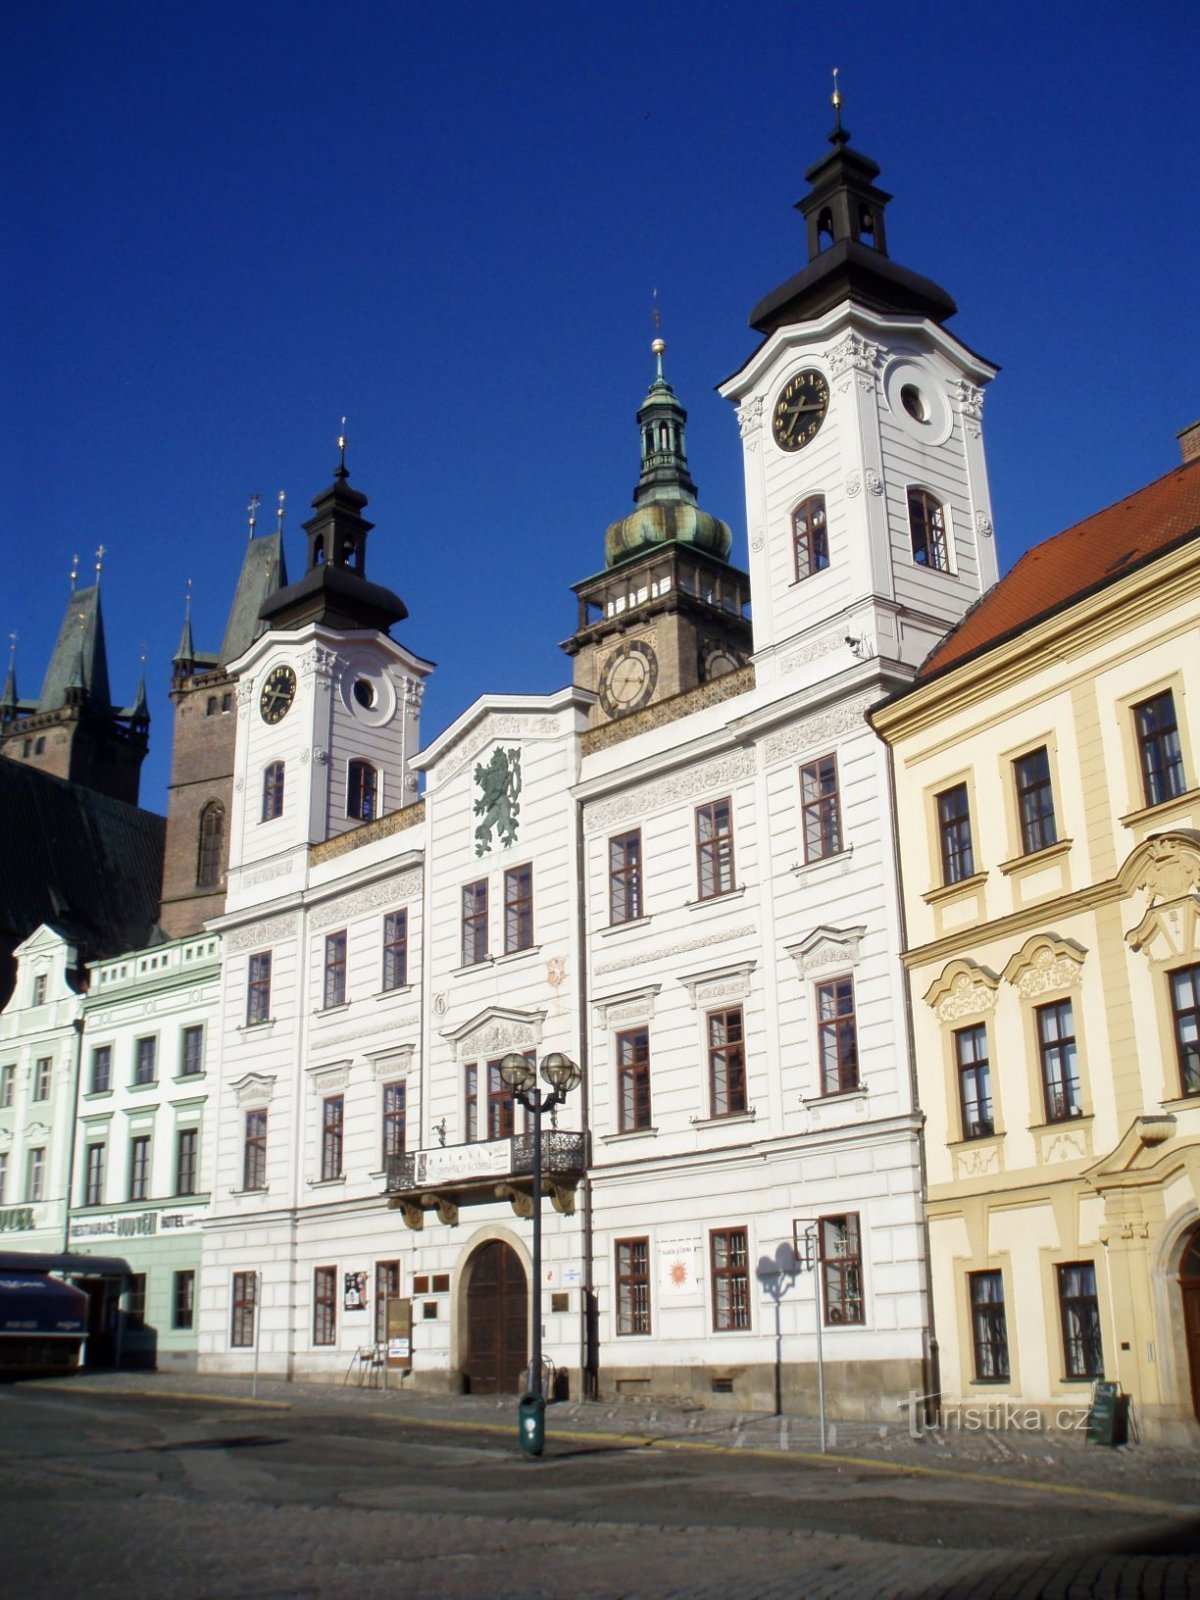 Tòa thị chính cũ số 1 (Hradec Králové, 13.5.2012/XNUMX/XNUMX)